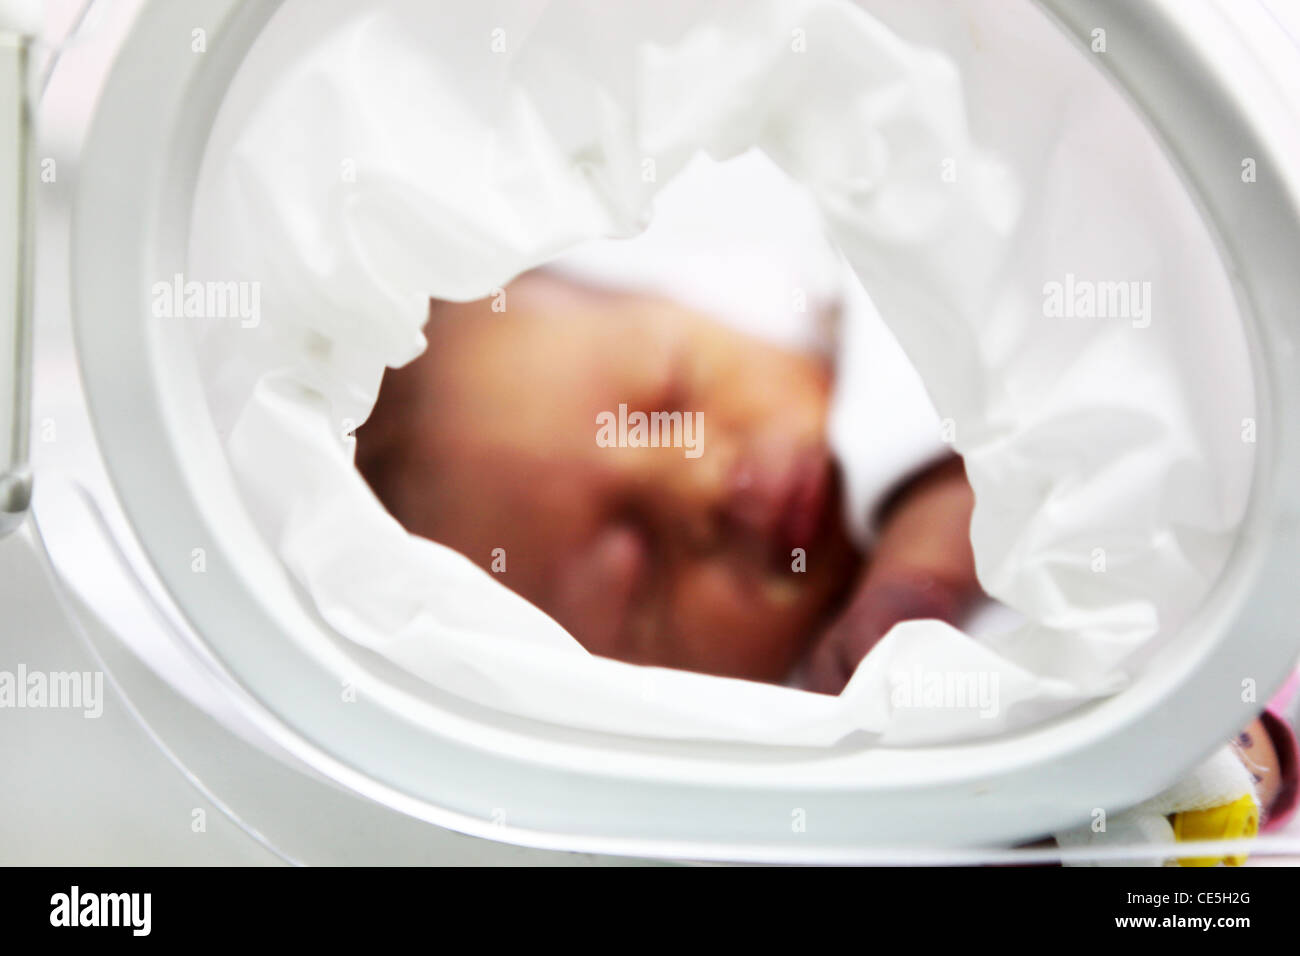 https://c8.alamy.com/comp/CE5H2G/newborn-baby-inside-incubator-CE5H2G.jpg